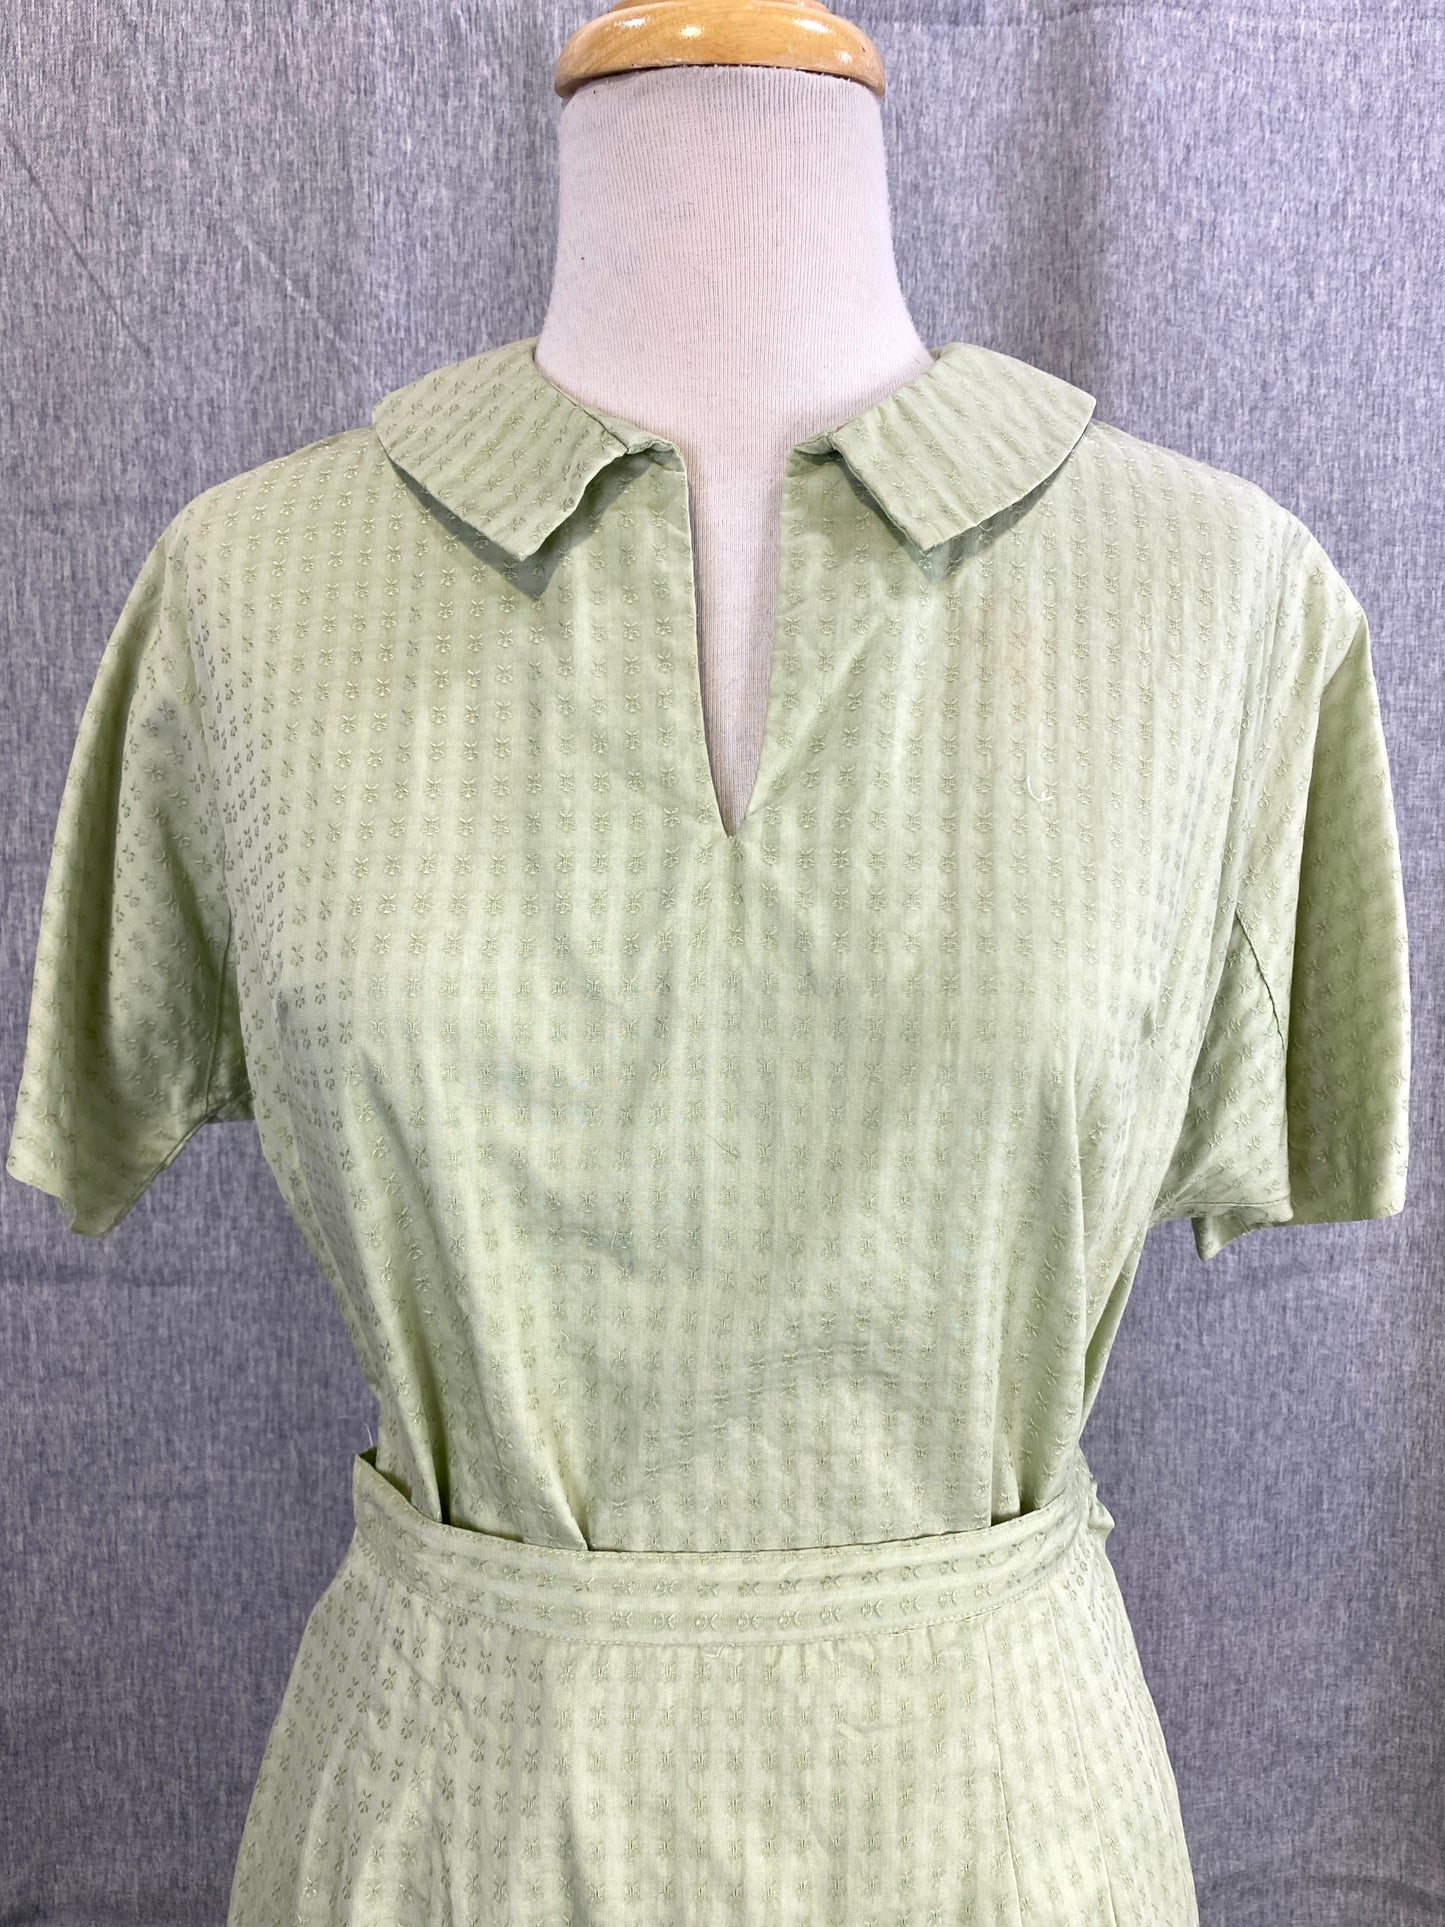 Vintage 1960s 2-Piece Green Cotton Skirt & Blouse Set, Small